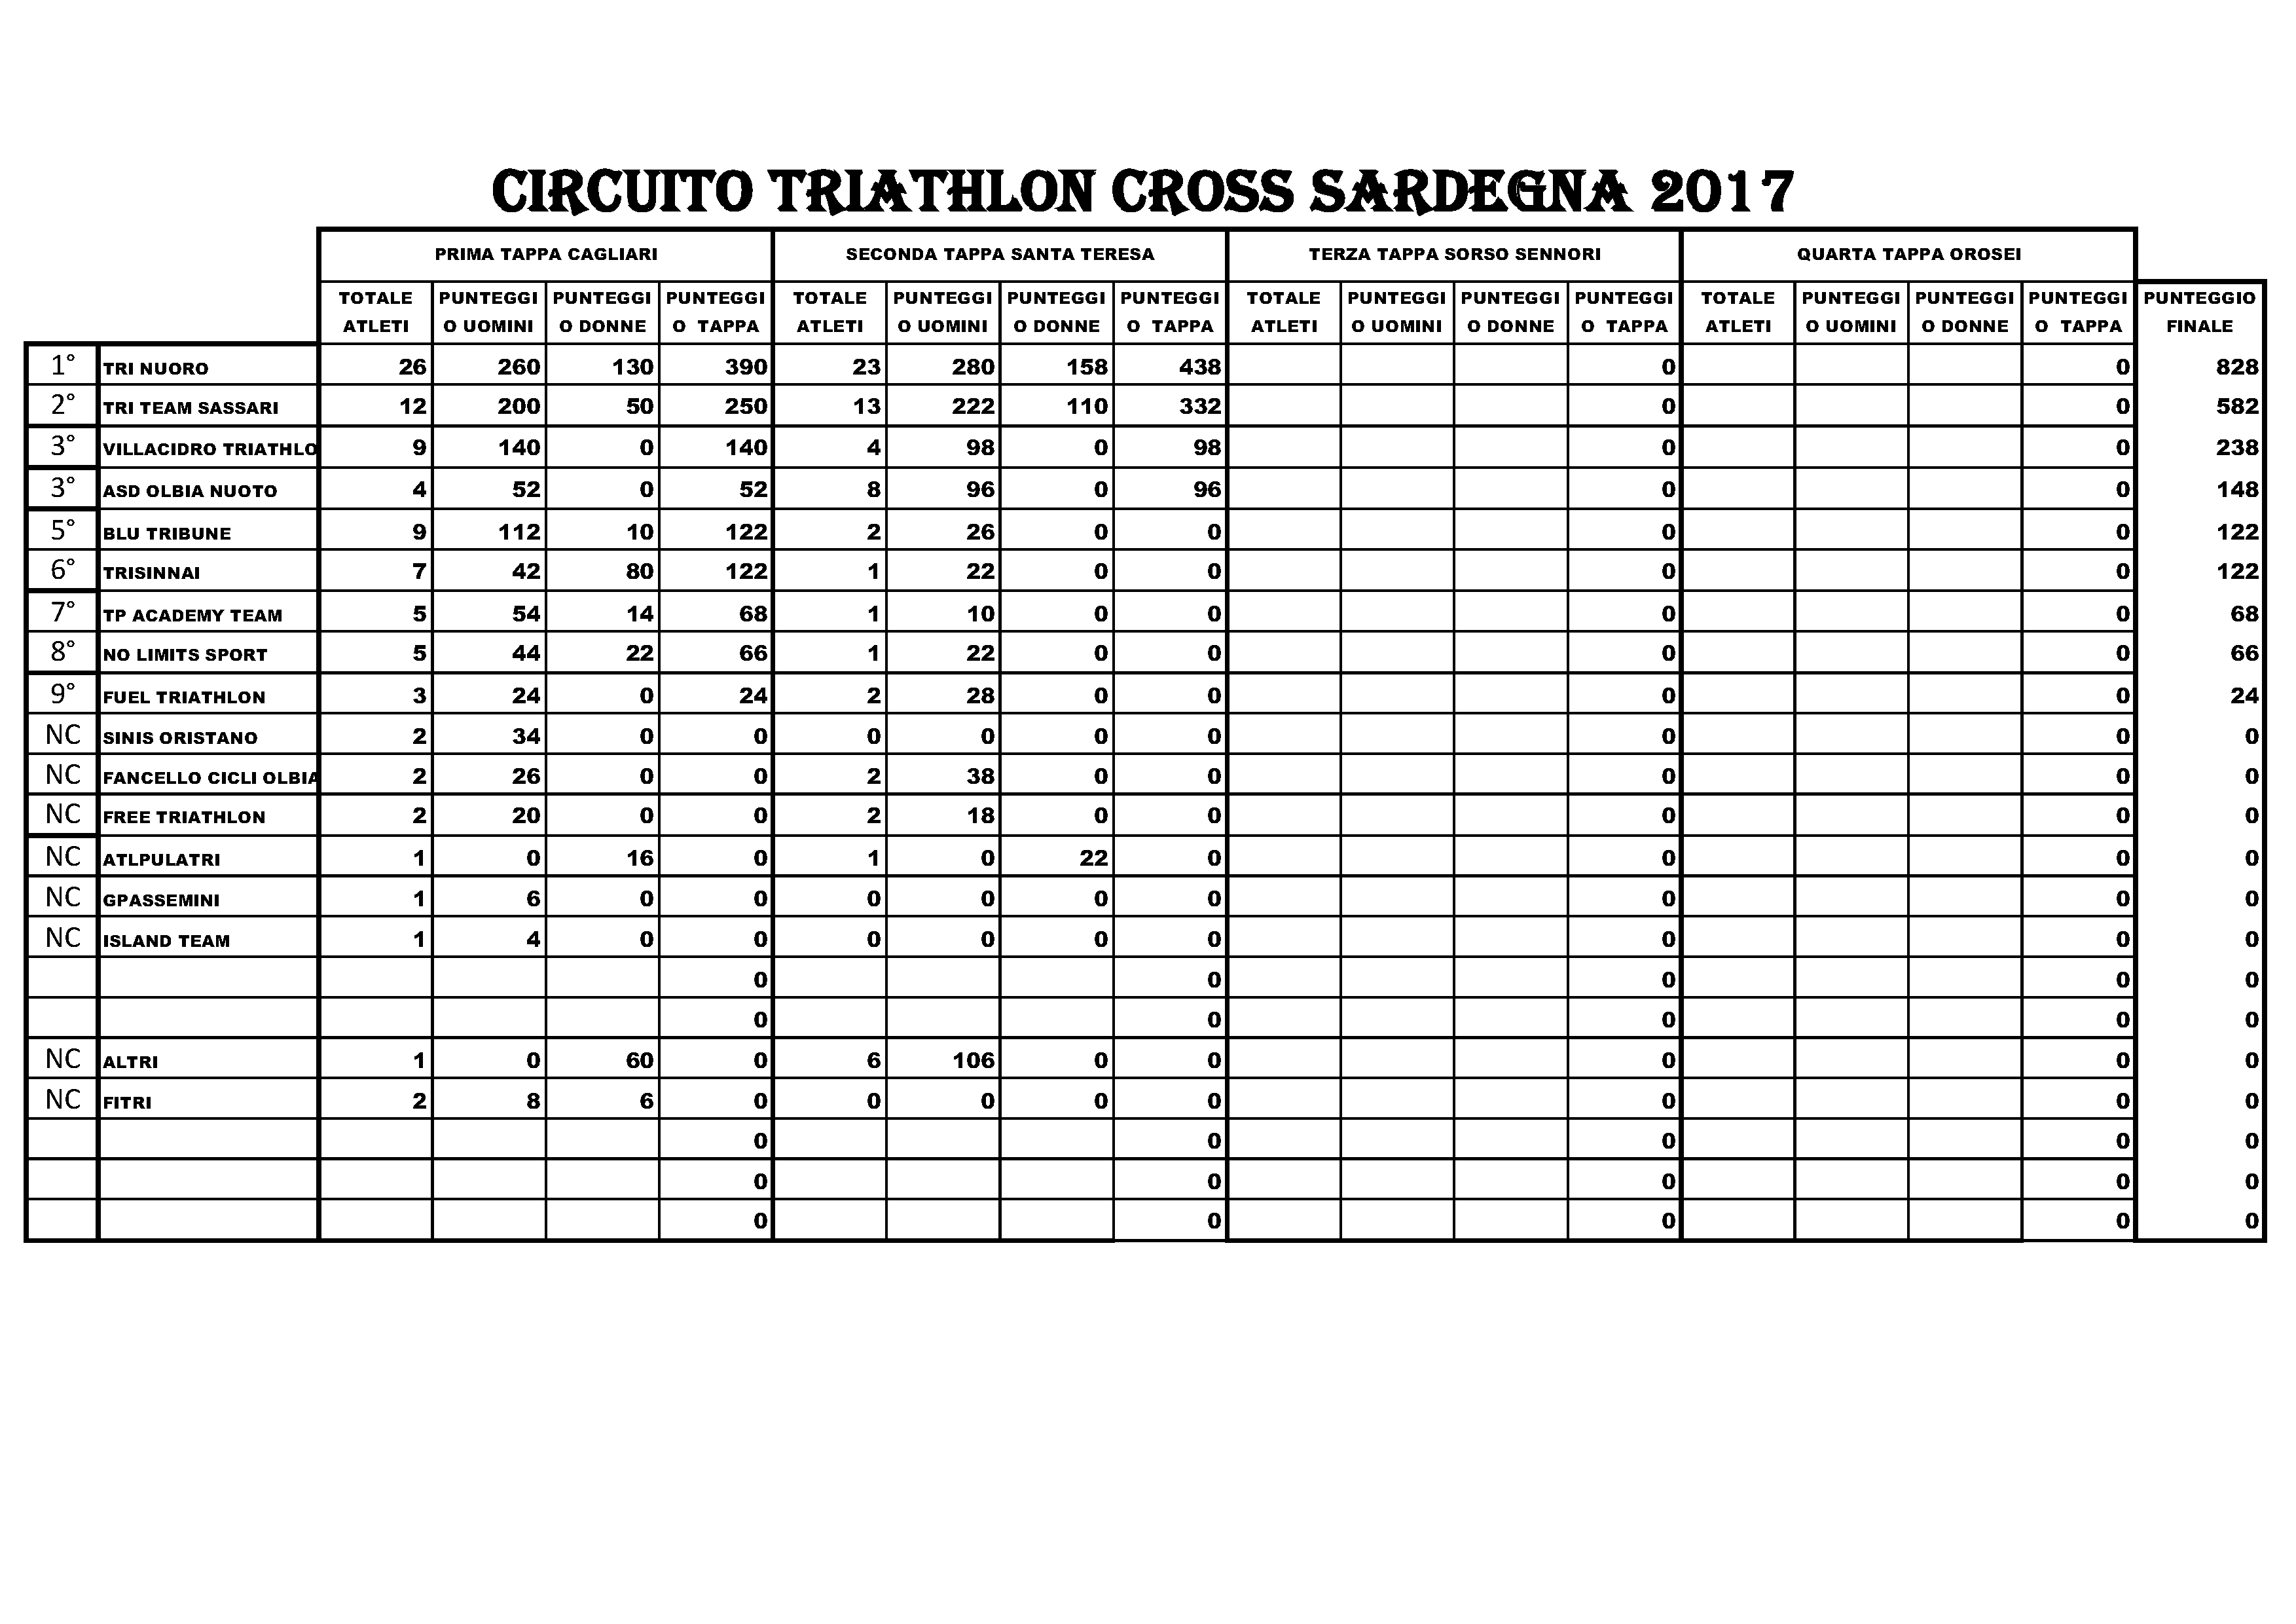 20170630 CIRCUITO TRIATHLON CROSS2017 Page 1